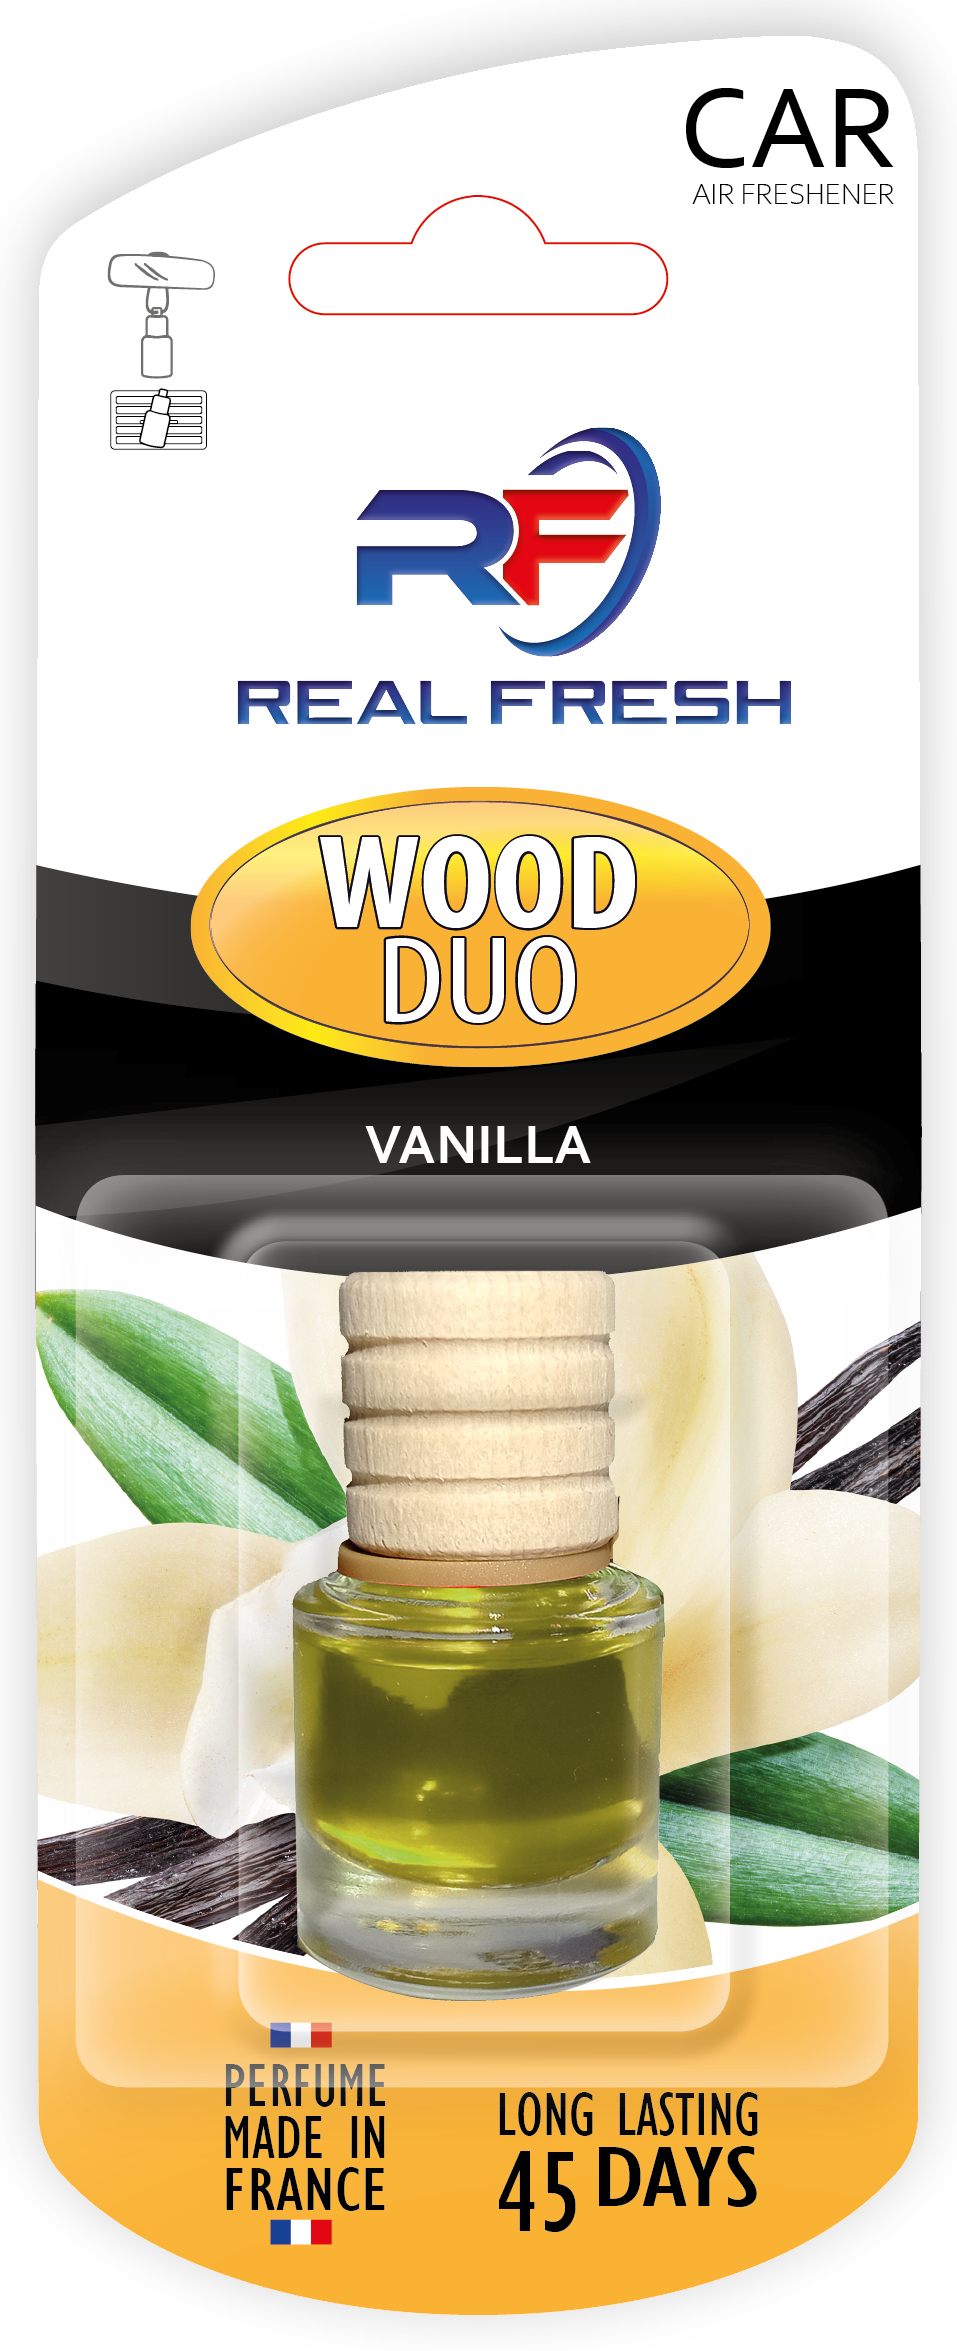 WOOD DUO Vanilla Image